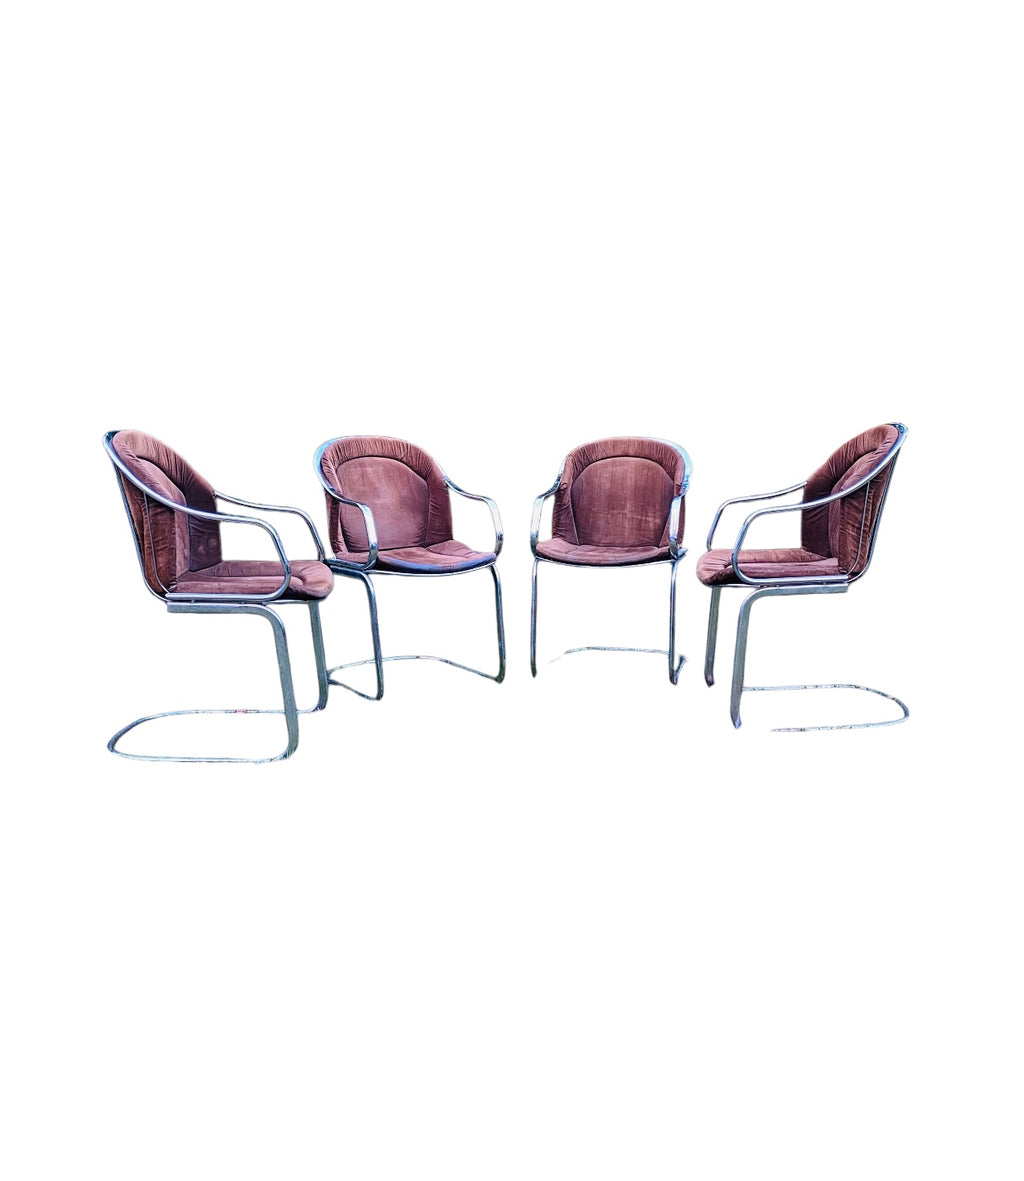 Vintage 1970’s Gastone Rinaldi Chrome Dining Chairs, Set of 4